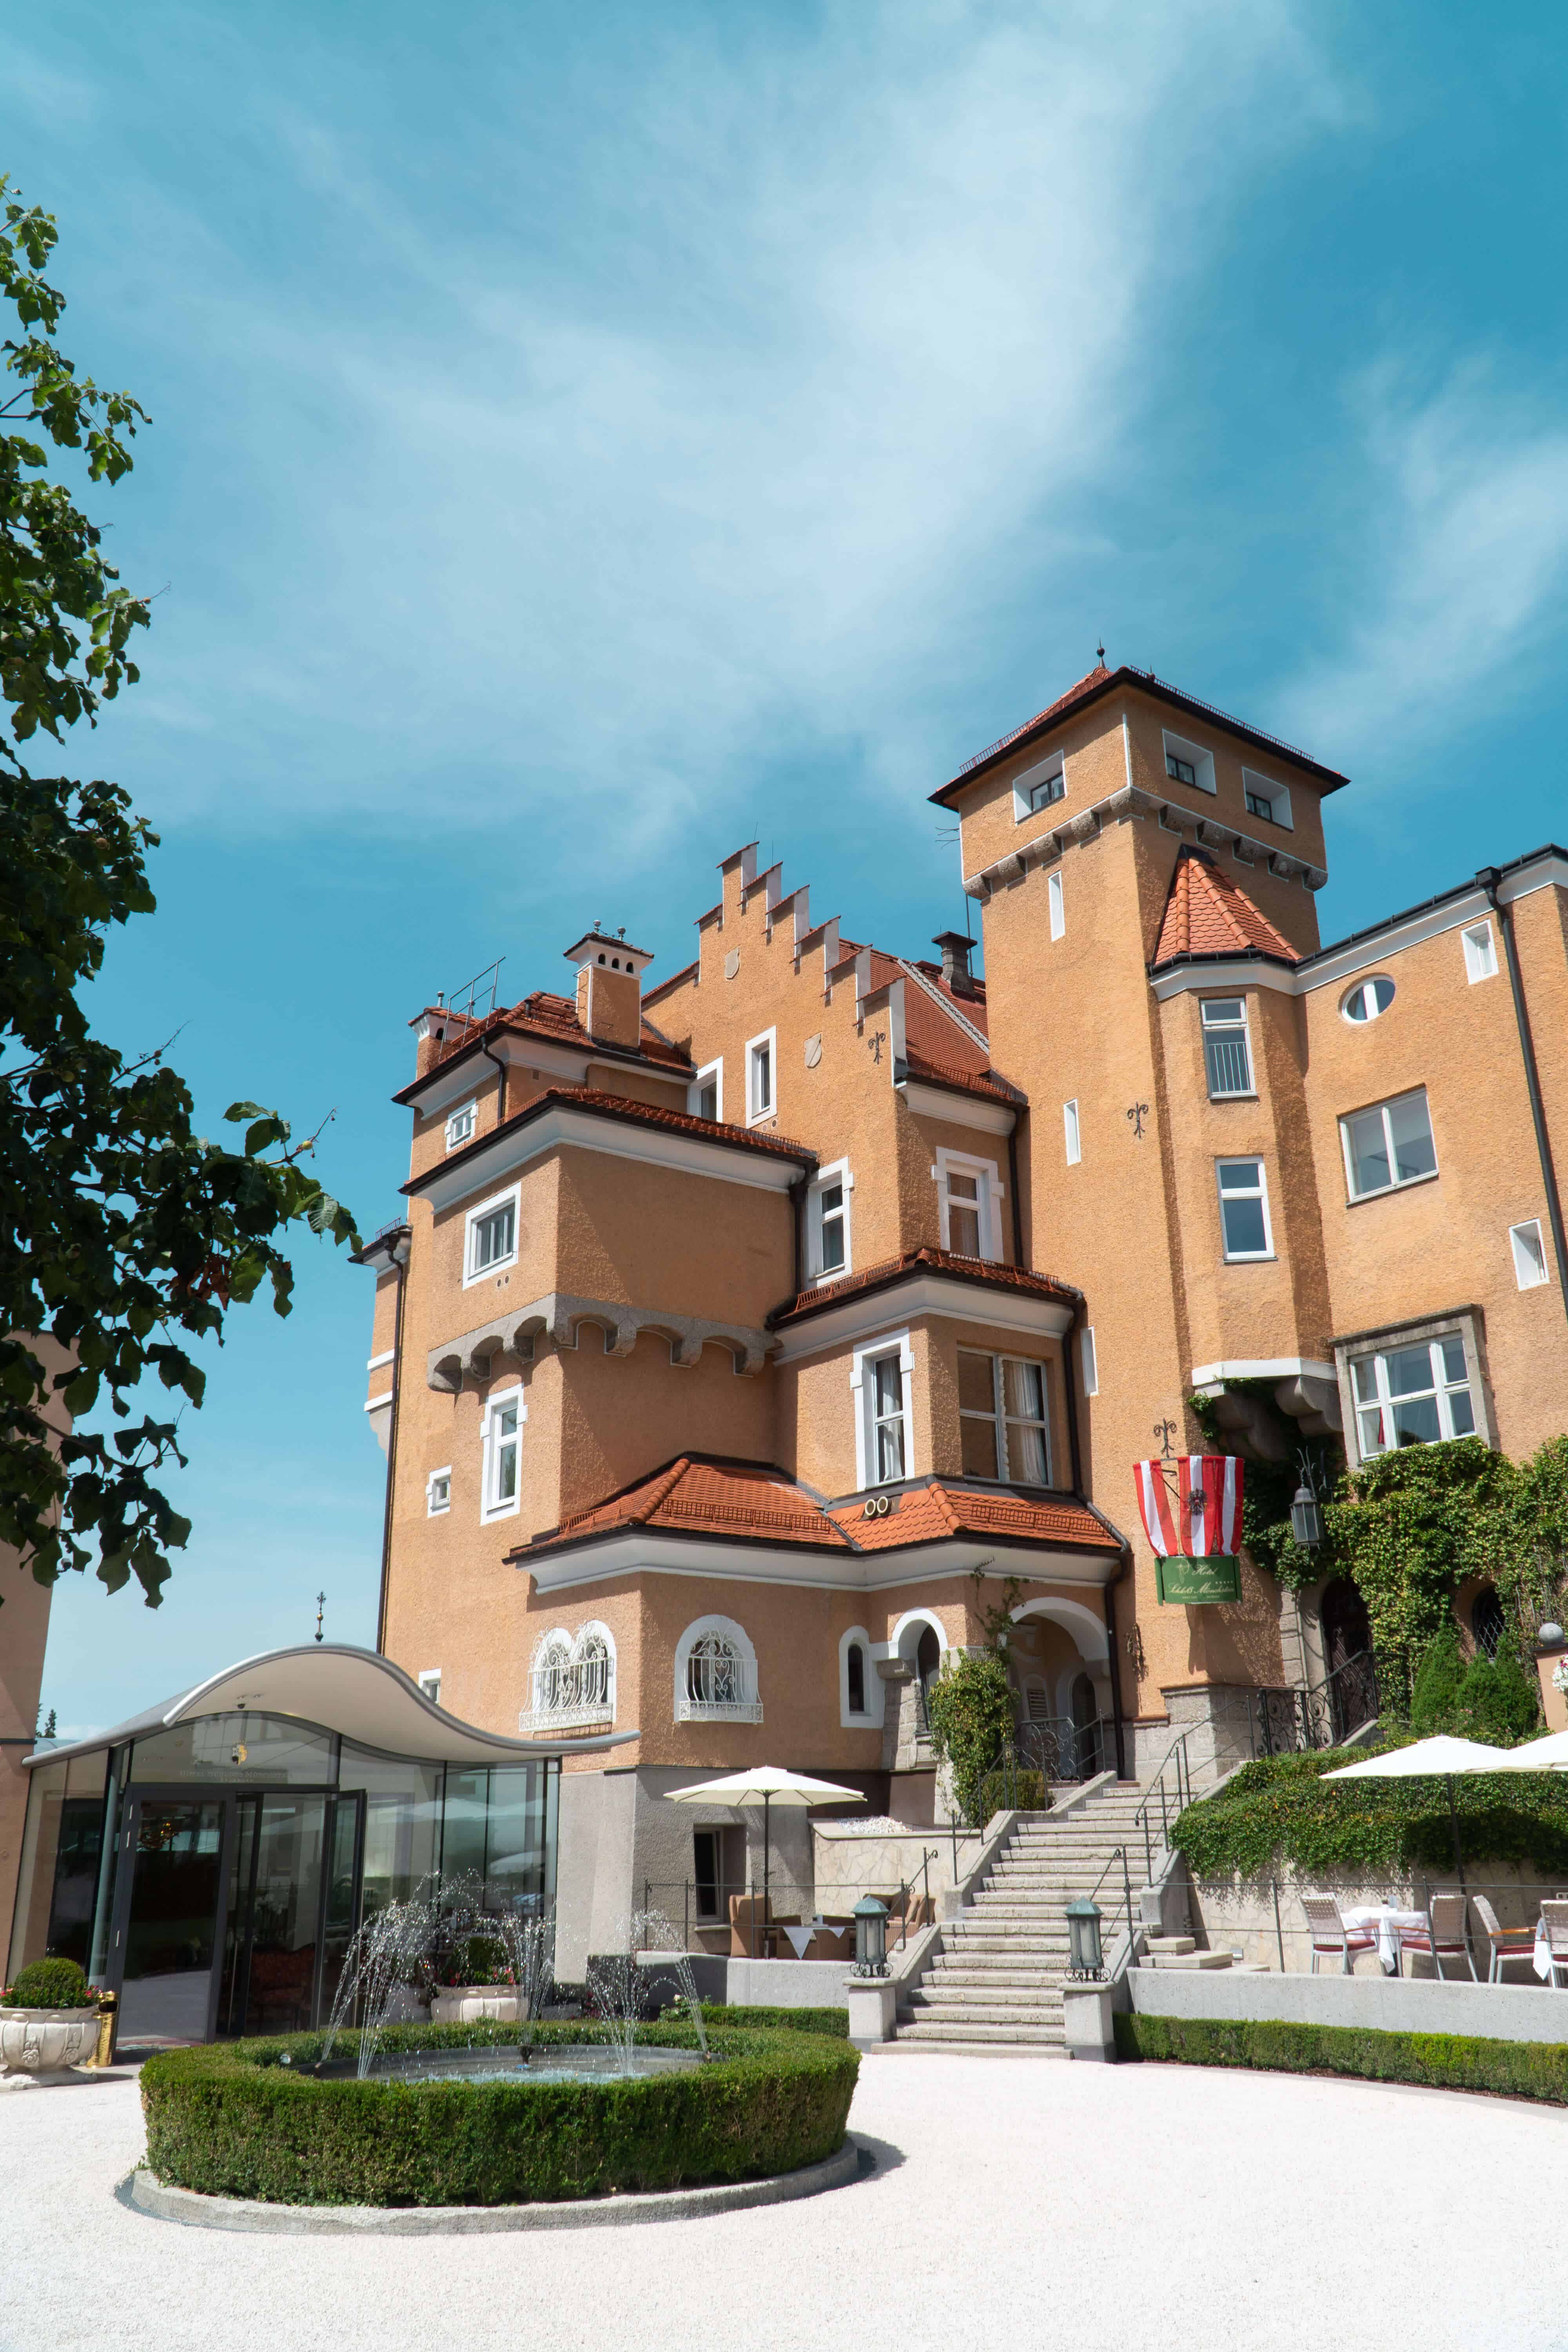 Staying at Hotel Schloss Mönchstein in Salzburg Austria | Hotel Exterior | The Republic of Rose | #Salzburg #Austria #Europe #Travel #SoundofMusic